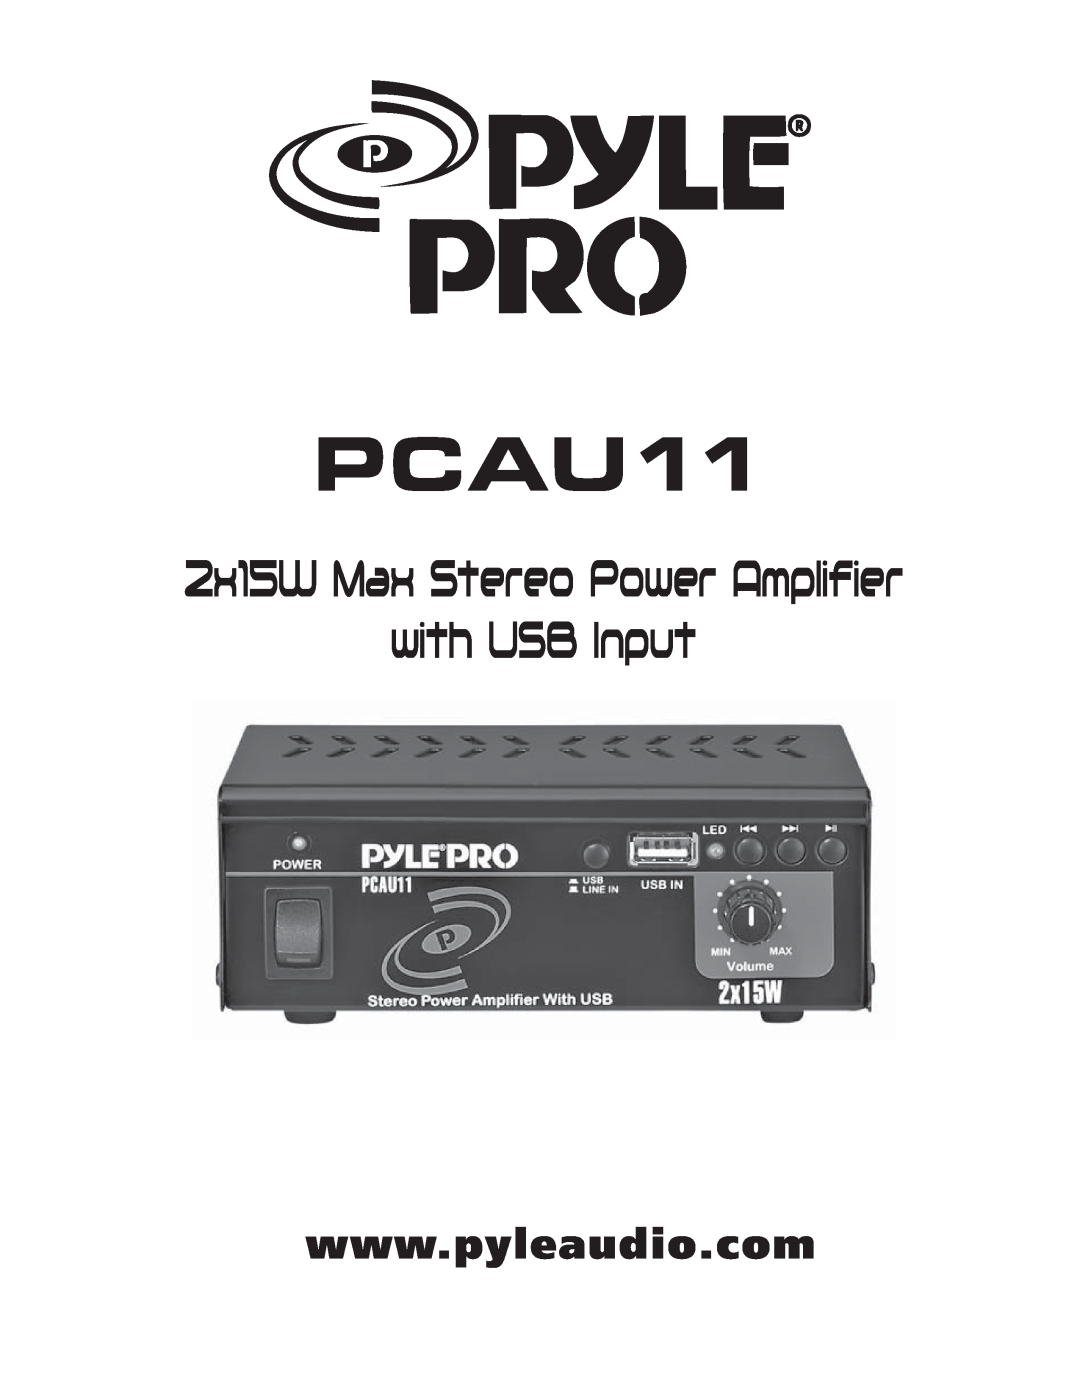 PYLE Audio PCAU11 manual with USB Input, 2x15W Max Stereo Power Amplifier 